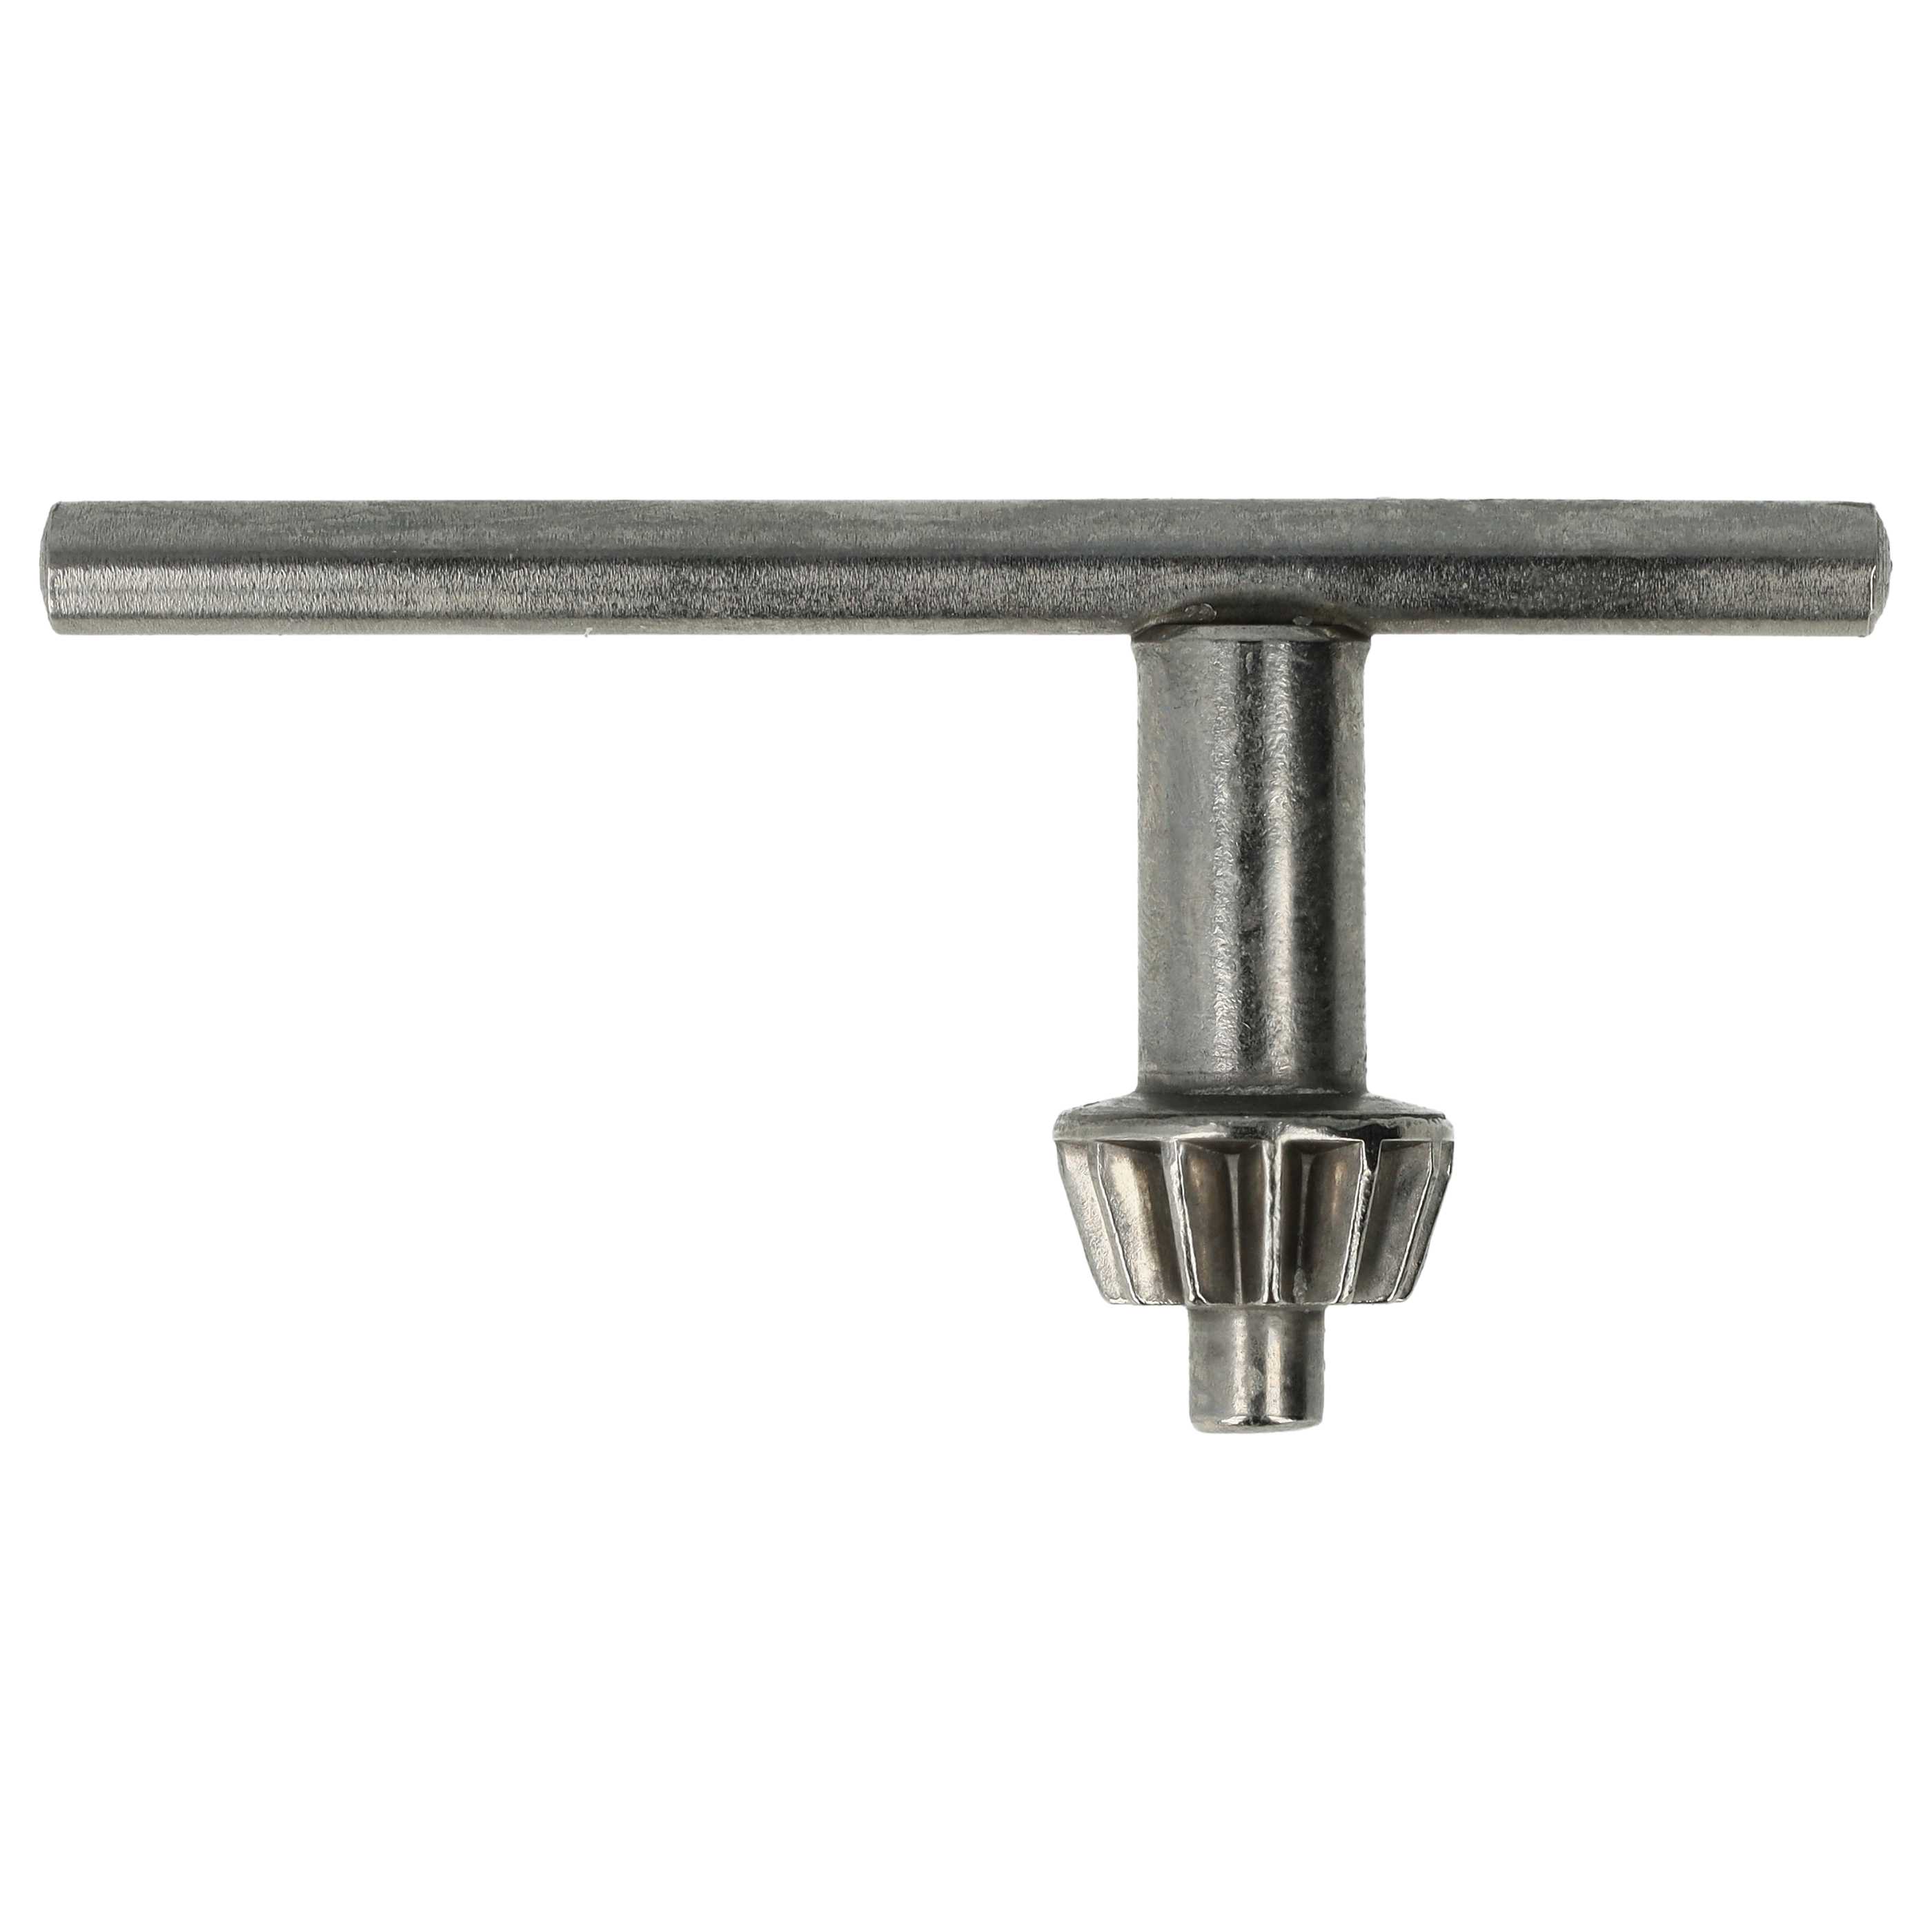 Bohrfutter mit Bohrfutterschlüssel für Bohrmaschinen, Schlagbohrer - Zahnkranzbohrfutter 1,5 - 13mm - 13mm (